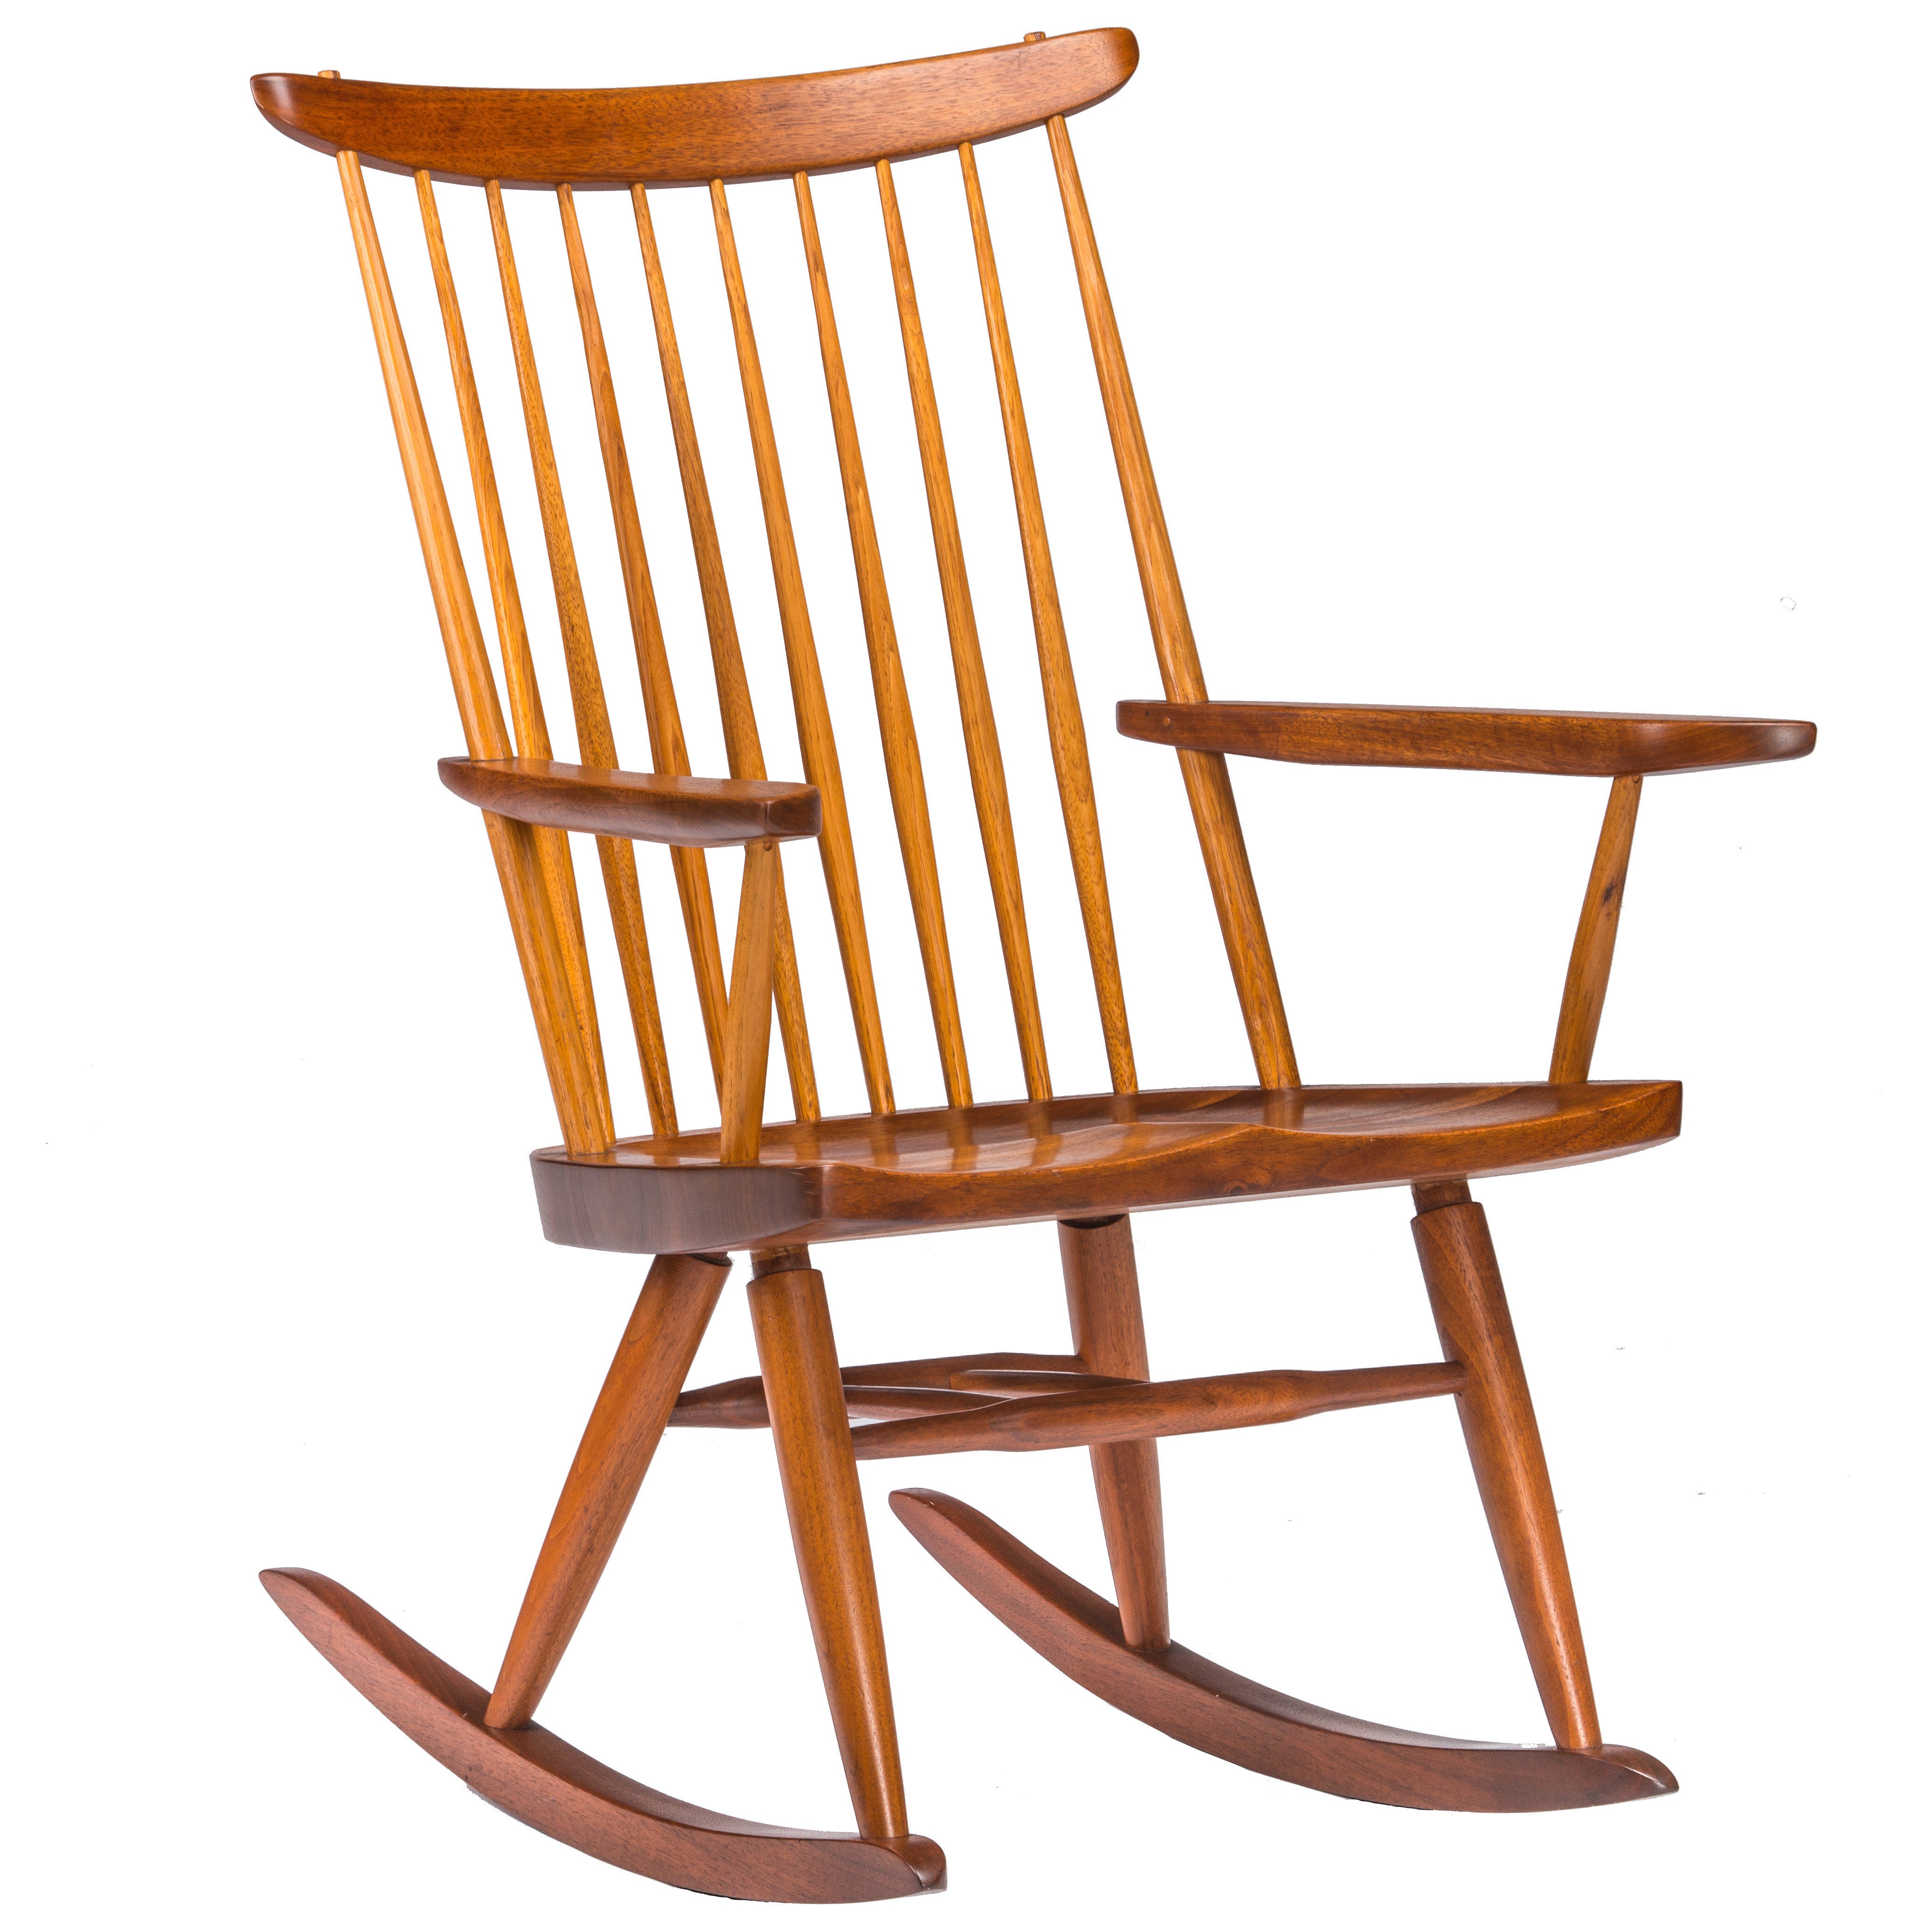 George Nakashima  "New" Rocking Chair